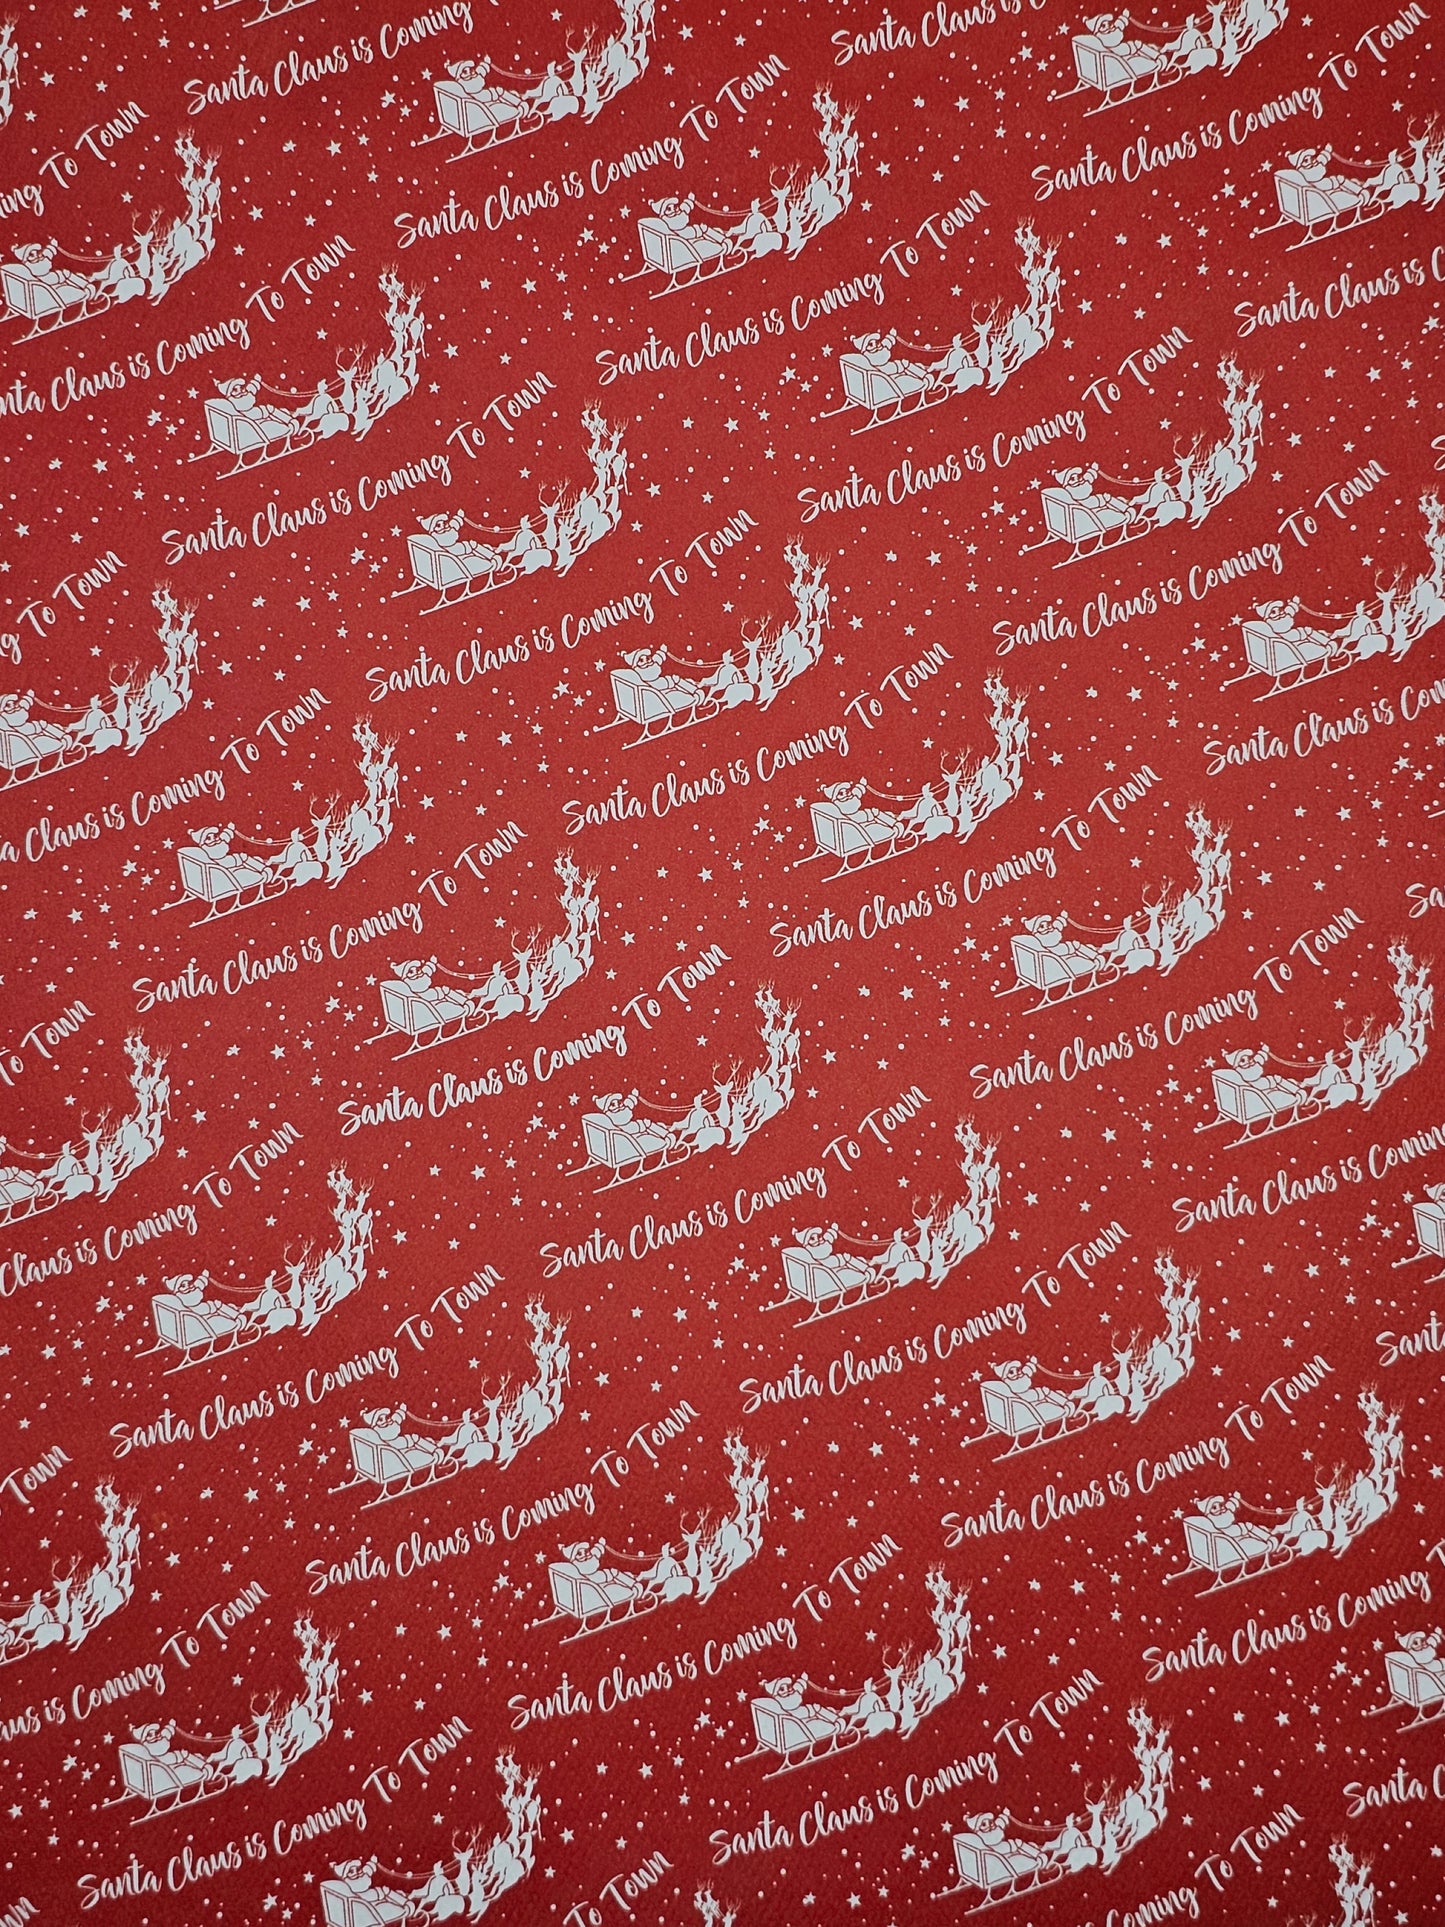 Santa and His Reindeer (Carta Bella's "Dear Santa" Collection) -12x12 Sheet